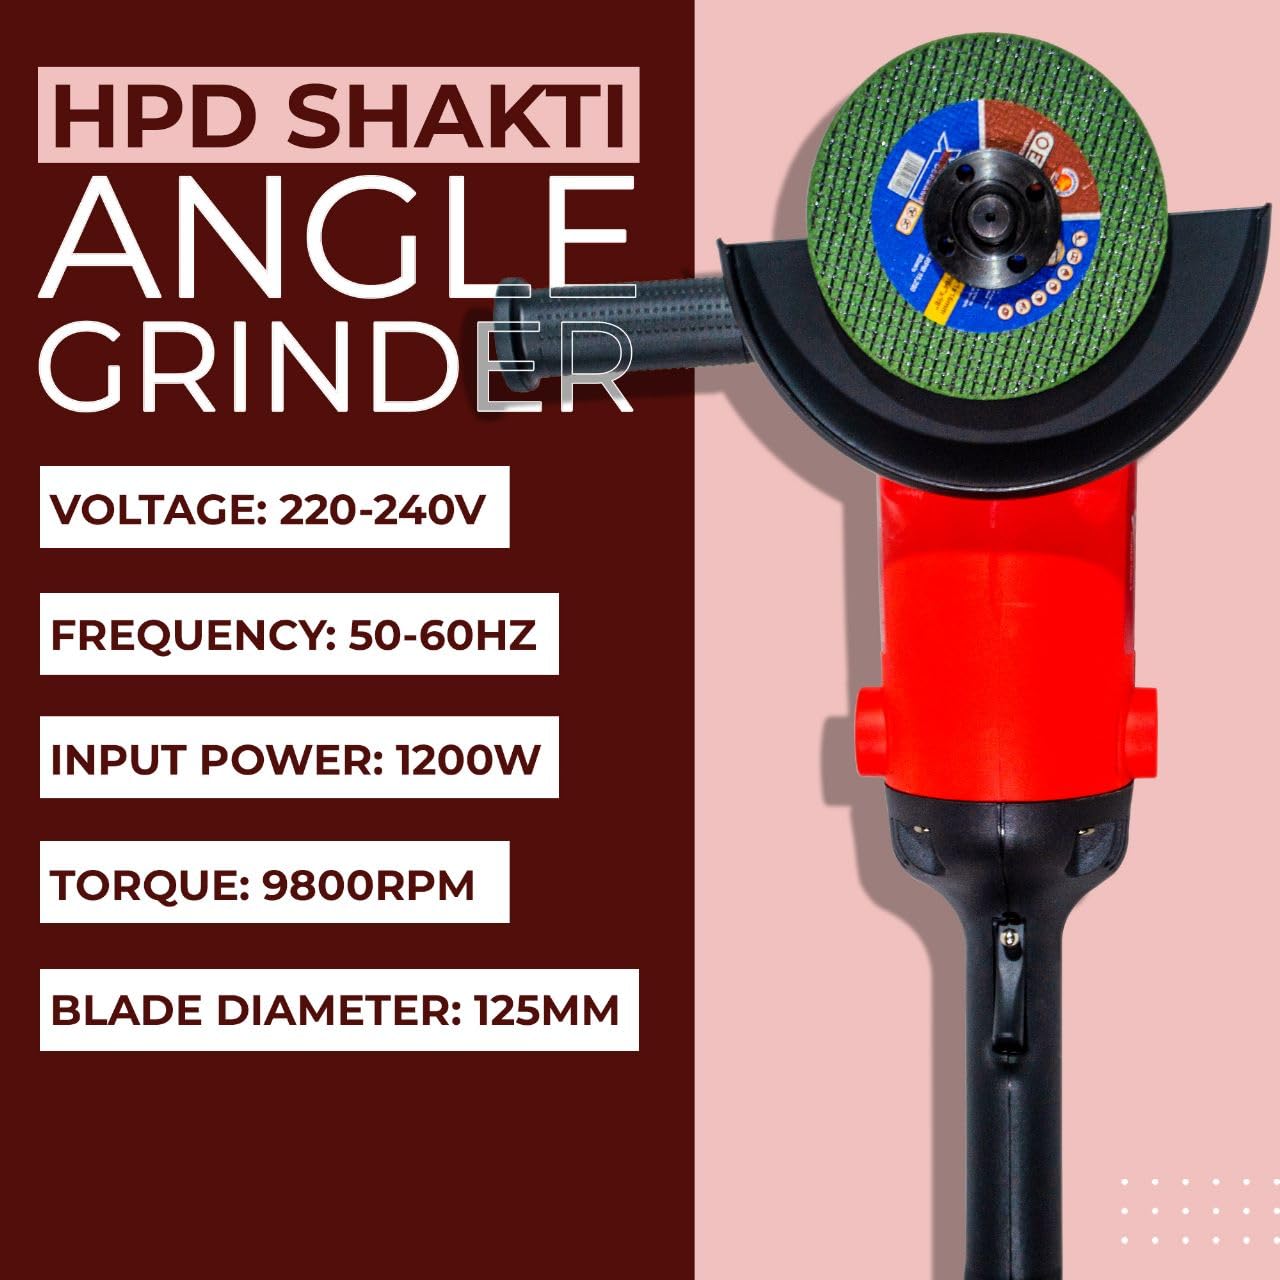 Buy HPD Shakti Angle Grinder With FREE (2 Metal Cutting Wheel of